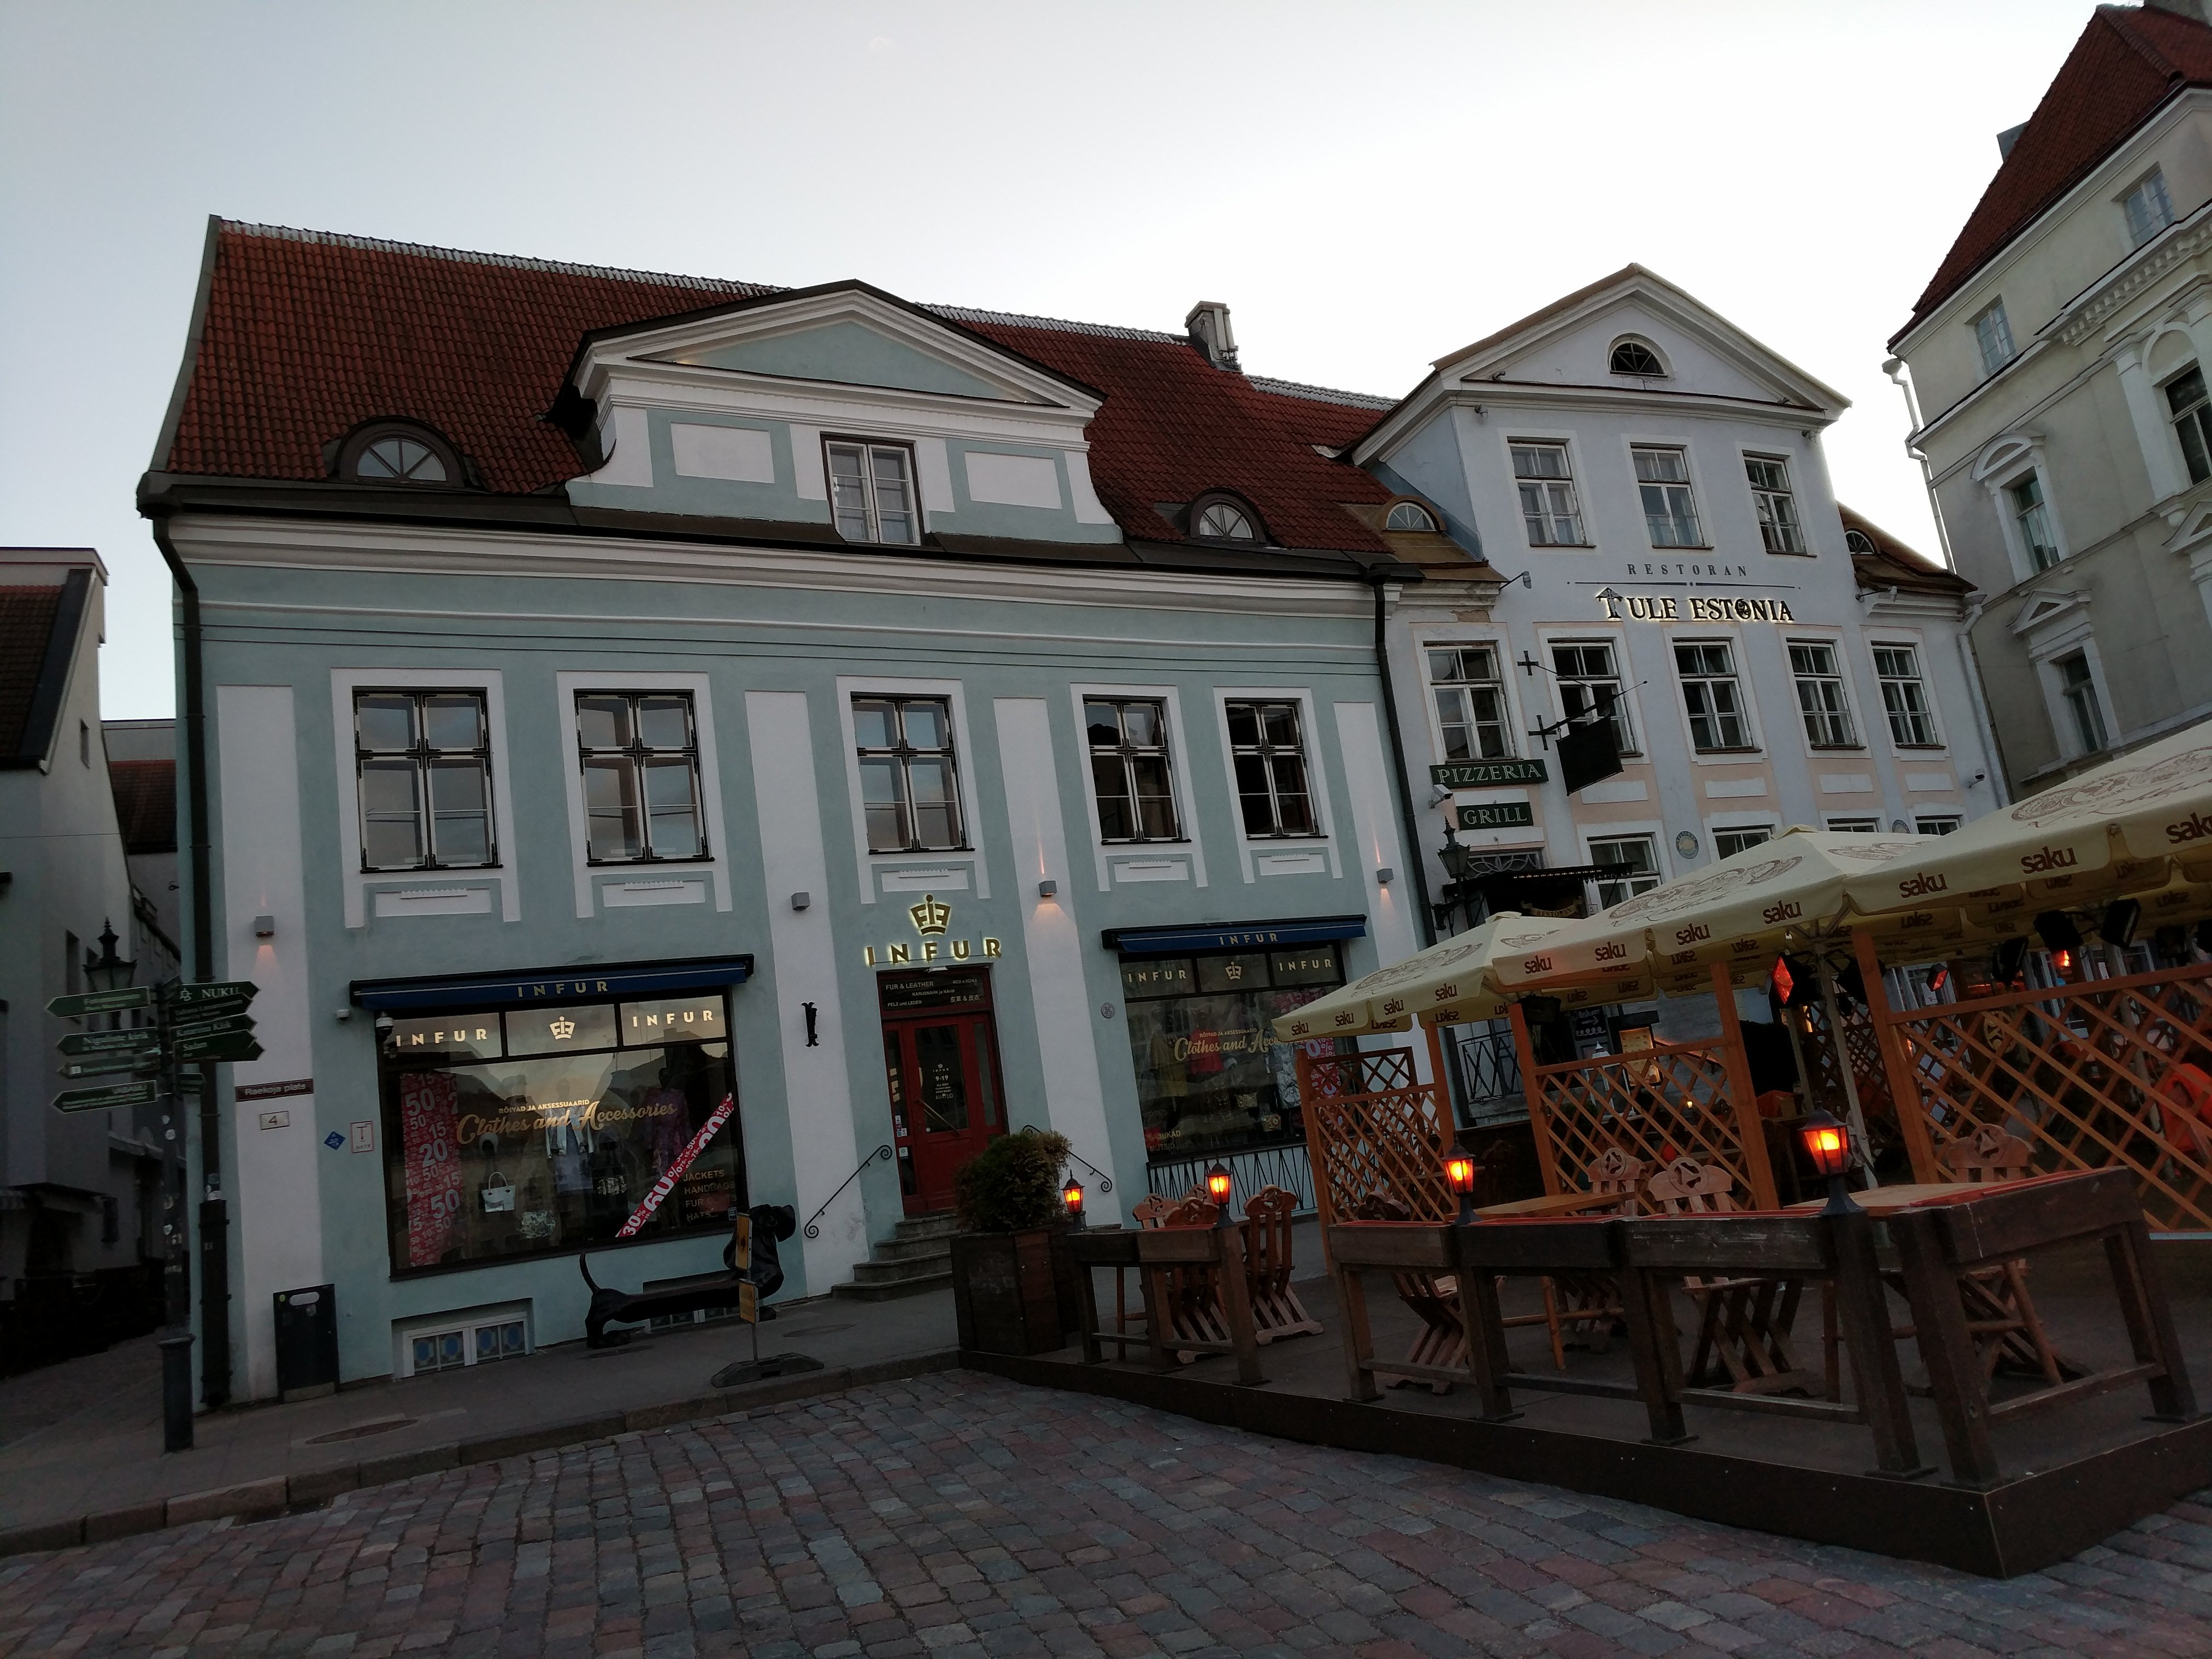 Tallinn. Raekoja plate. Houses with A&G and Restaurant Karl Friedrich rephoto